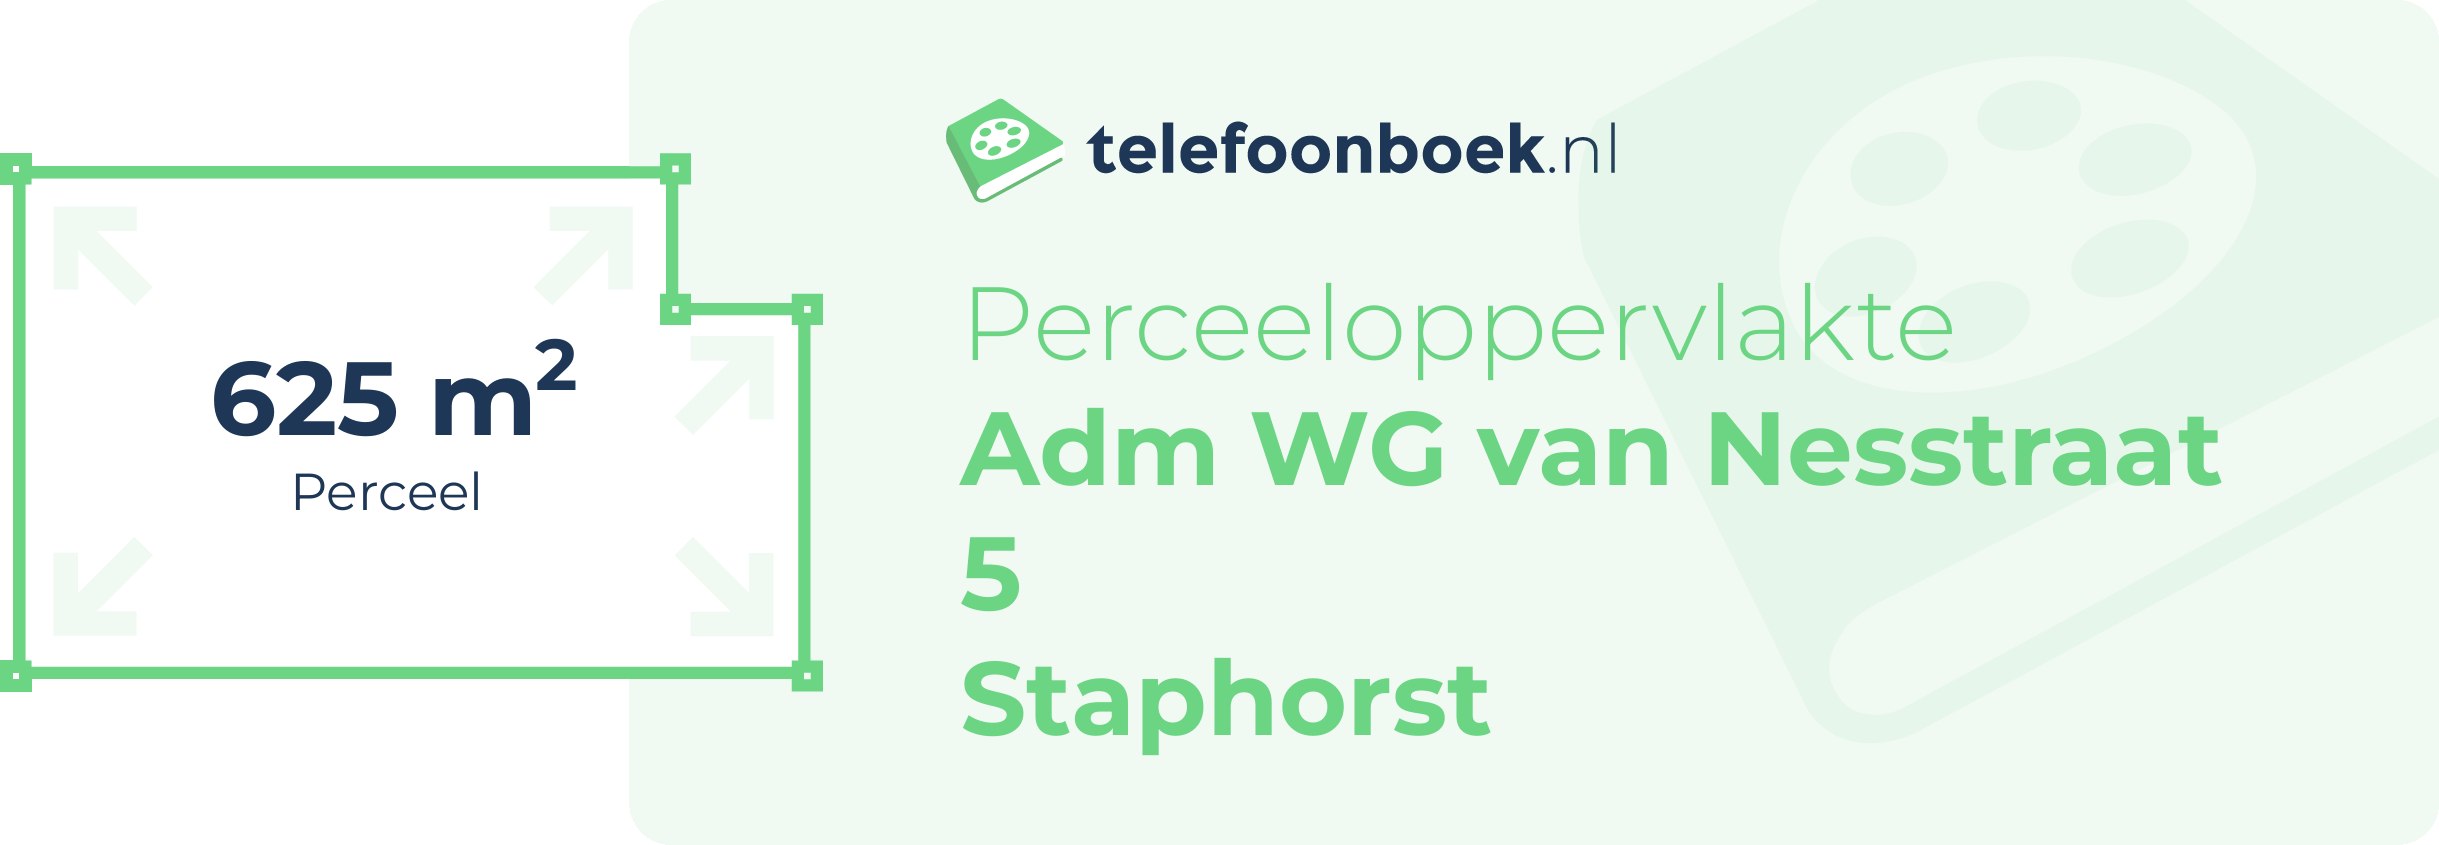 Perceeloppervlakte Adm WG Van Nesstraat 5 Staphorst